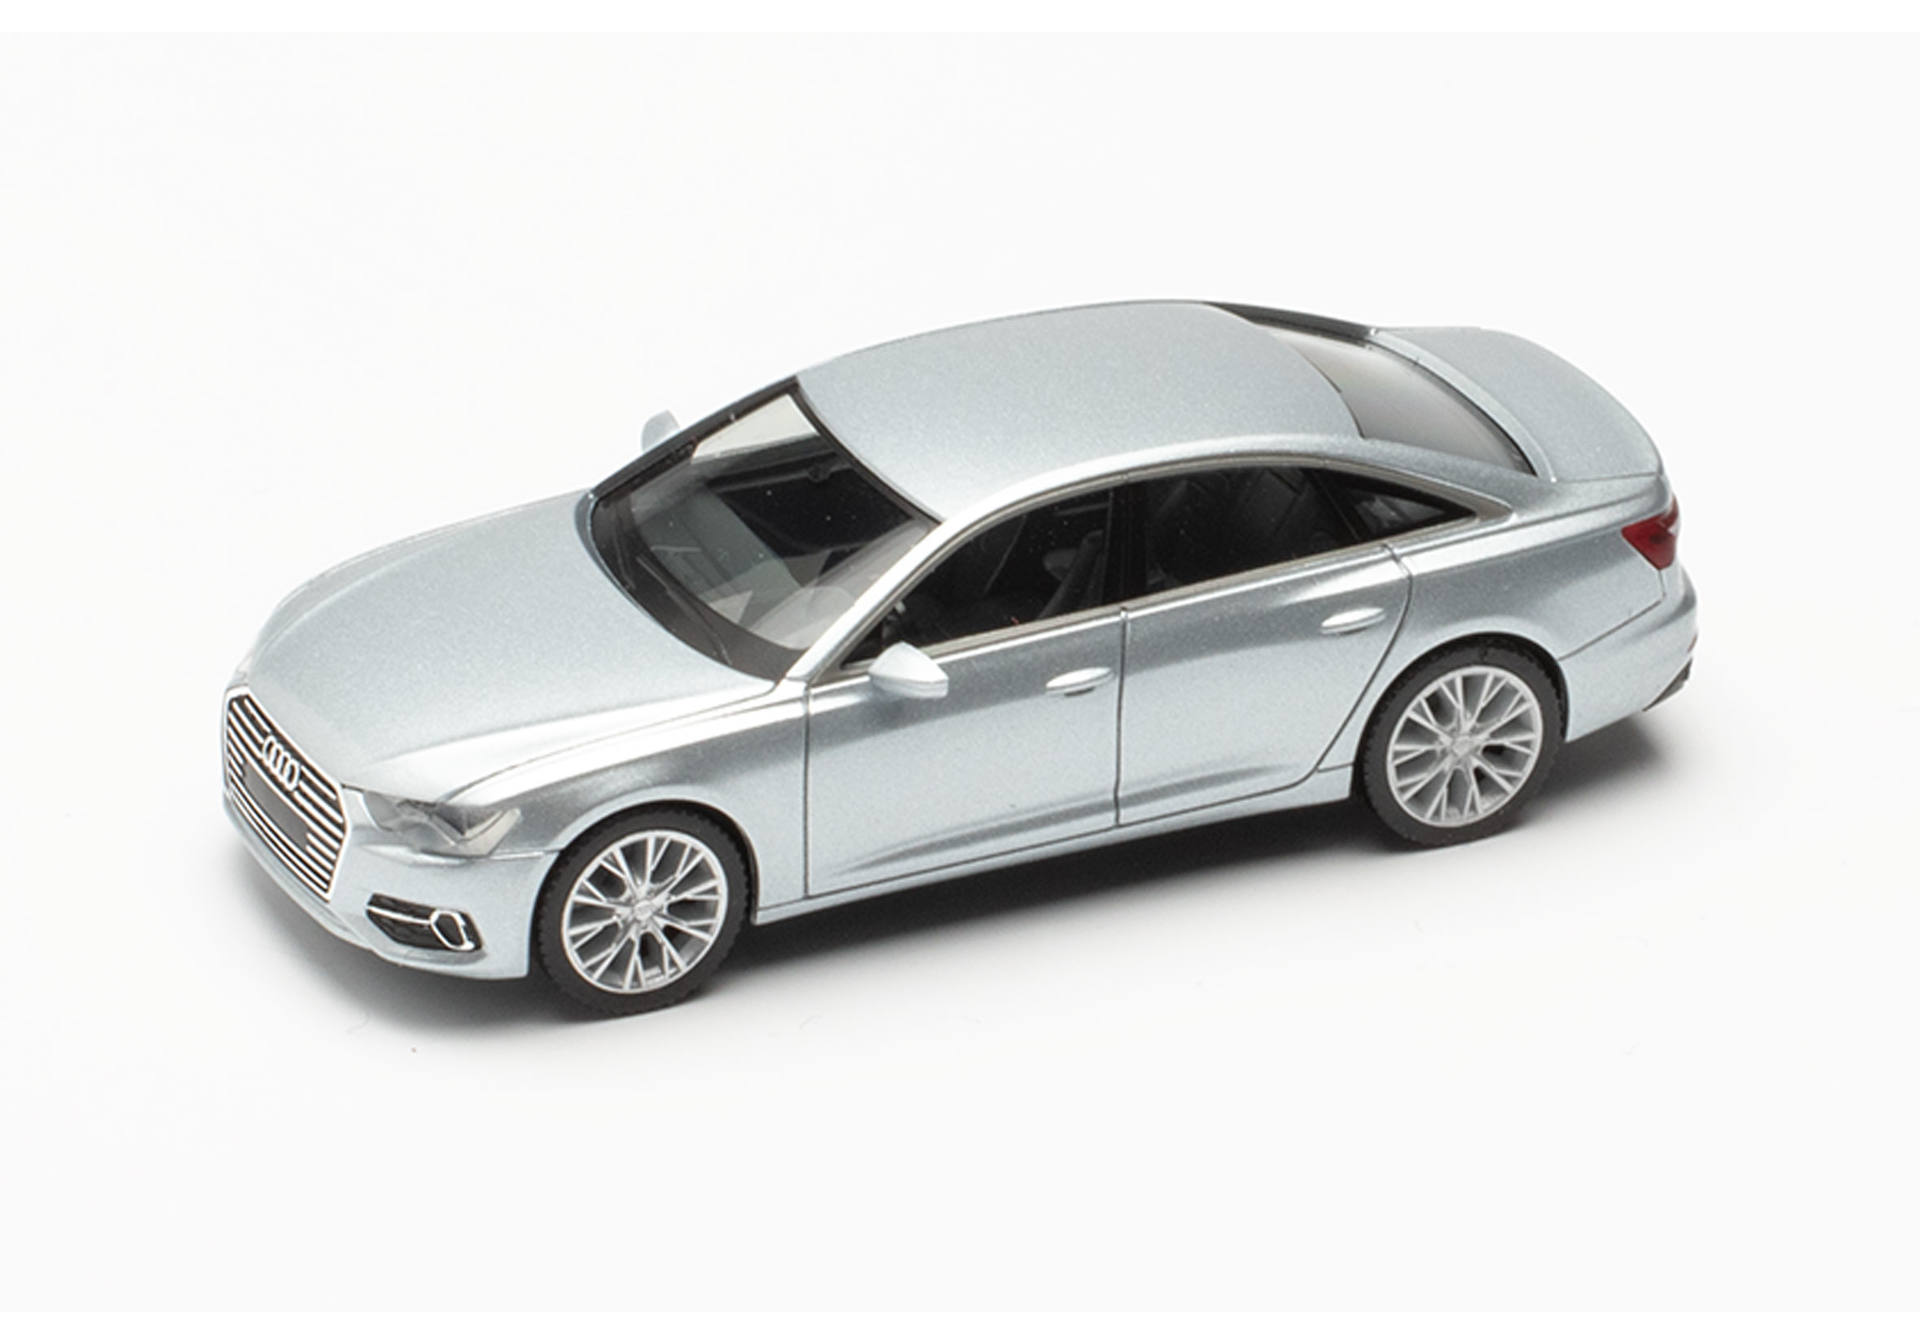 Audi A6 Limousine, floret silver metallic